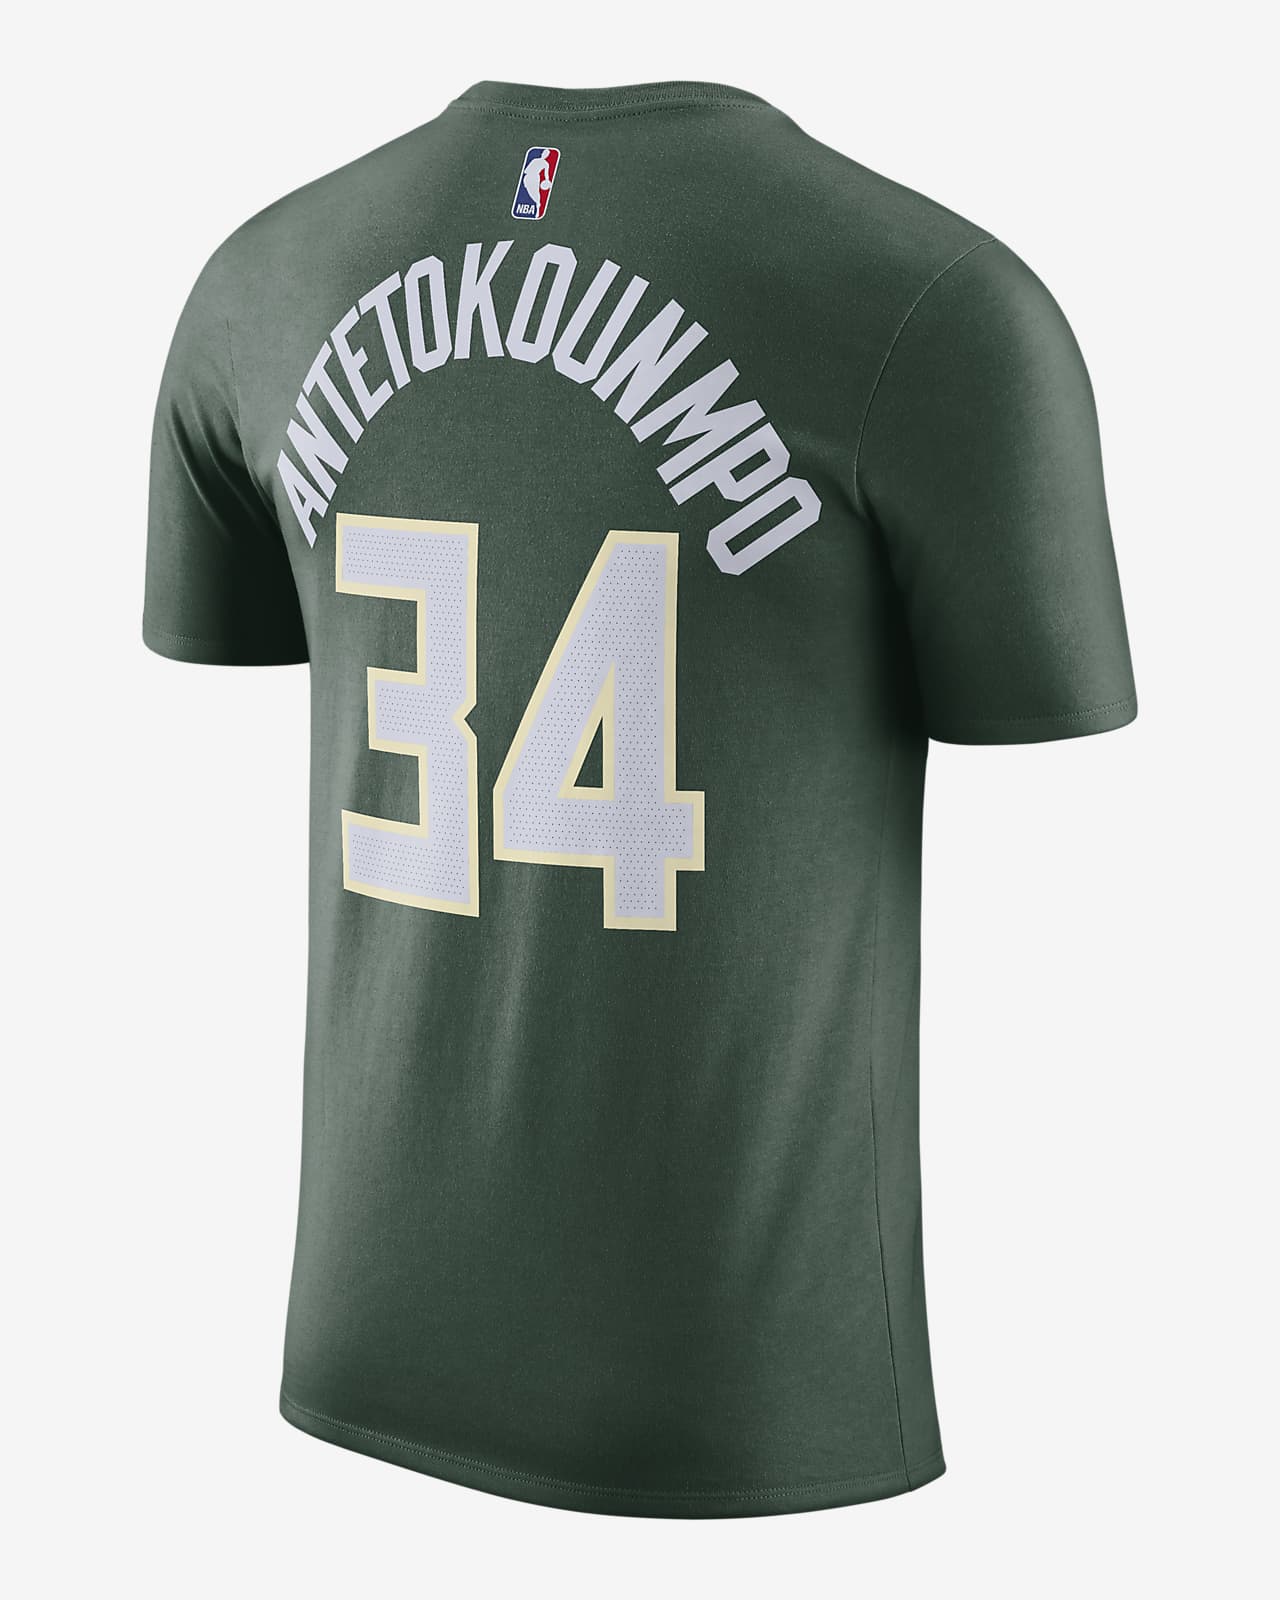 Milwaukee Bucks Champions Nike NBA T-Shirt